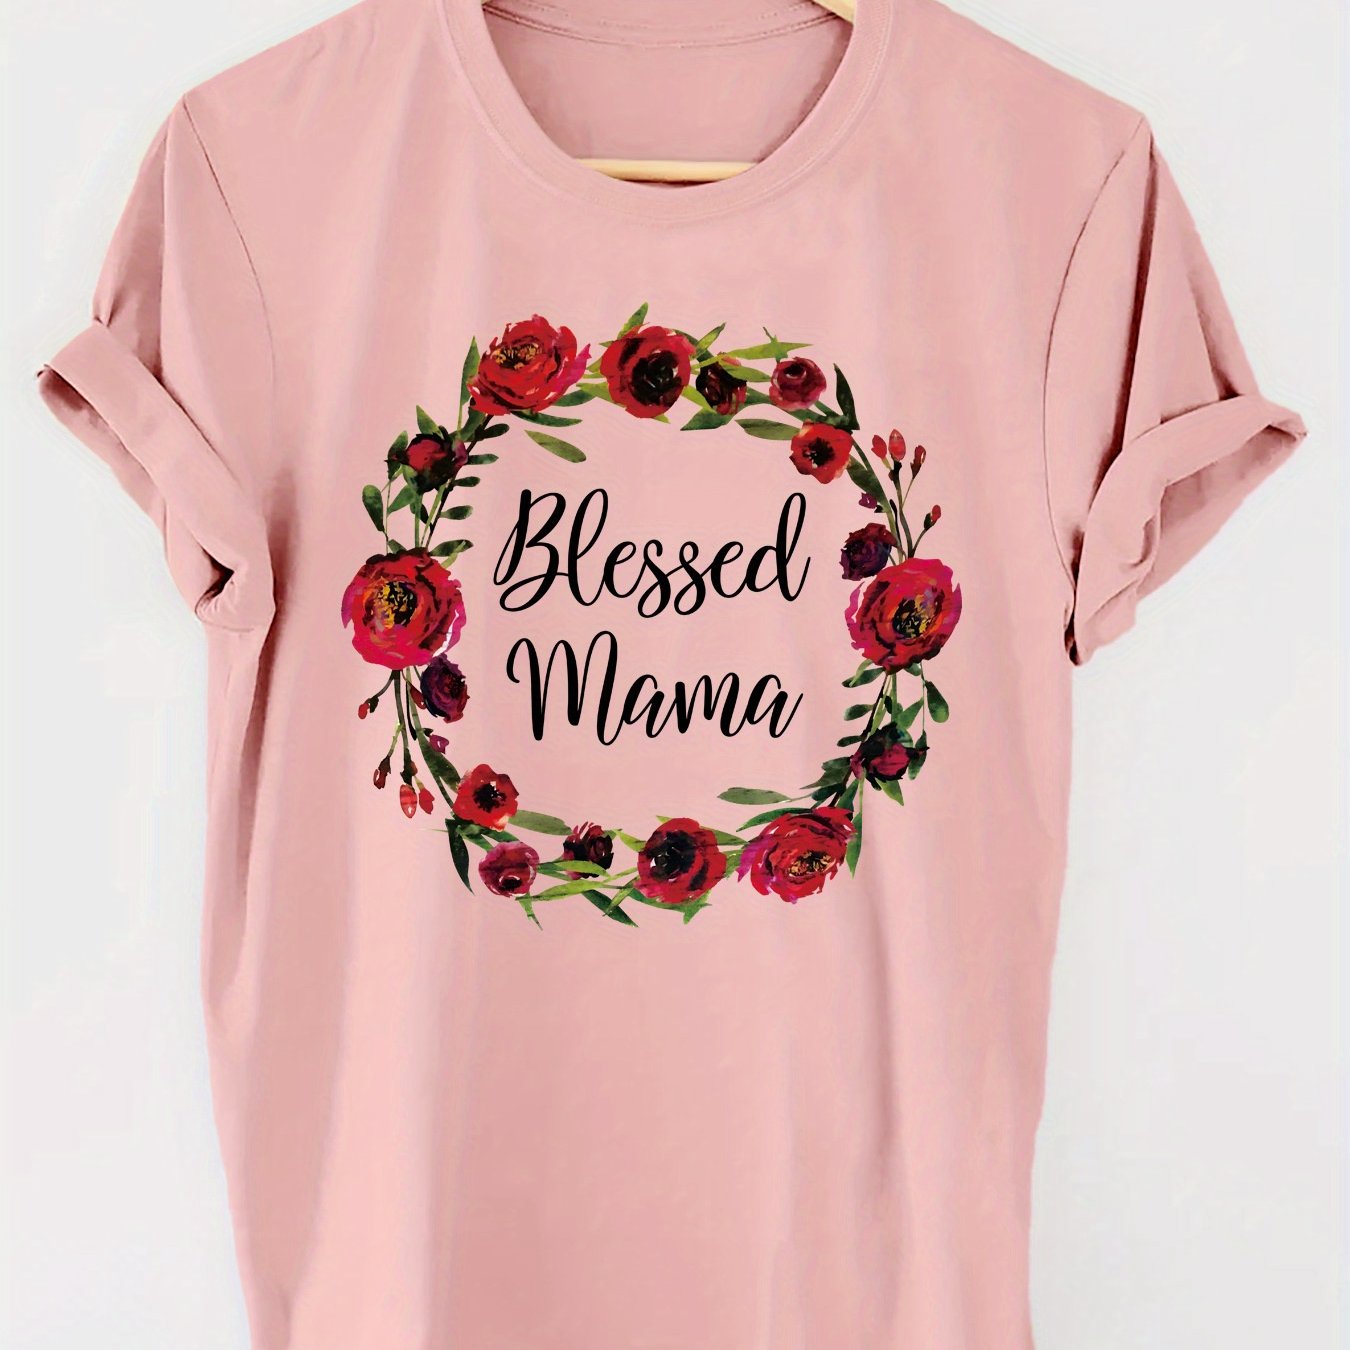 Blessed Mama Women's Christian T-shirt claimedbygoddesigns